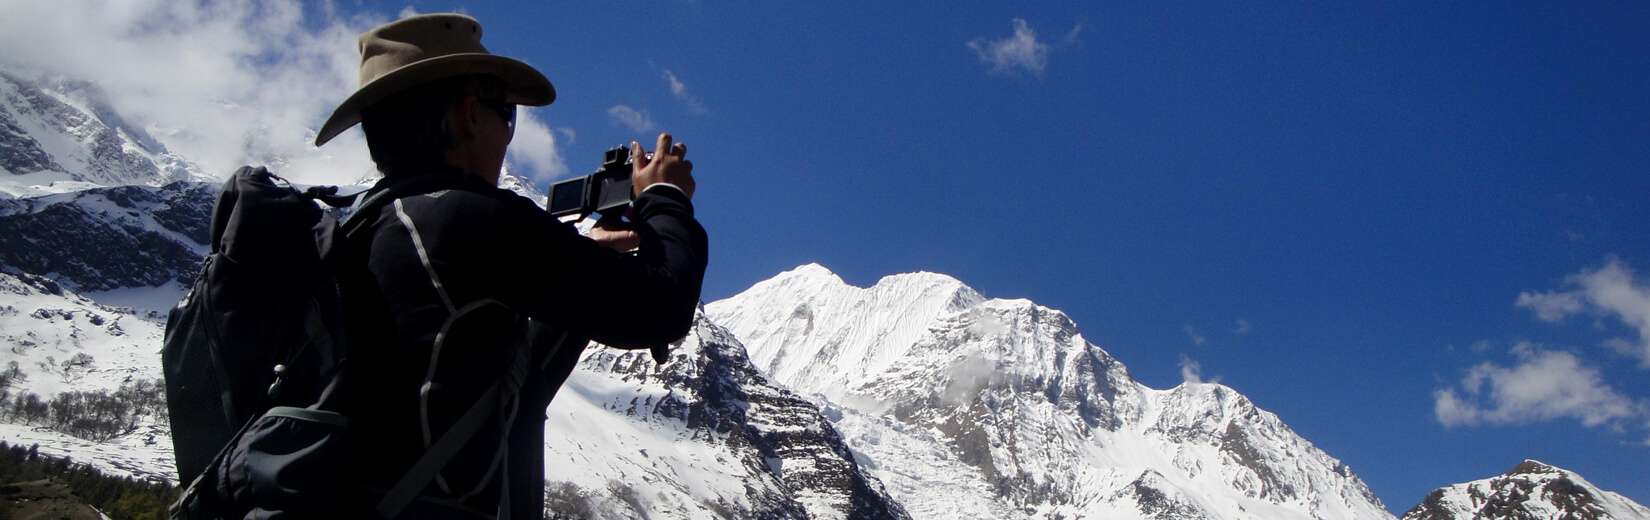 7 Best Trek in Nepal Post Covid - 19